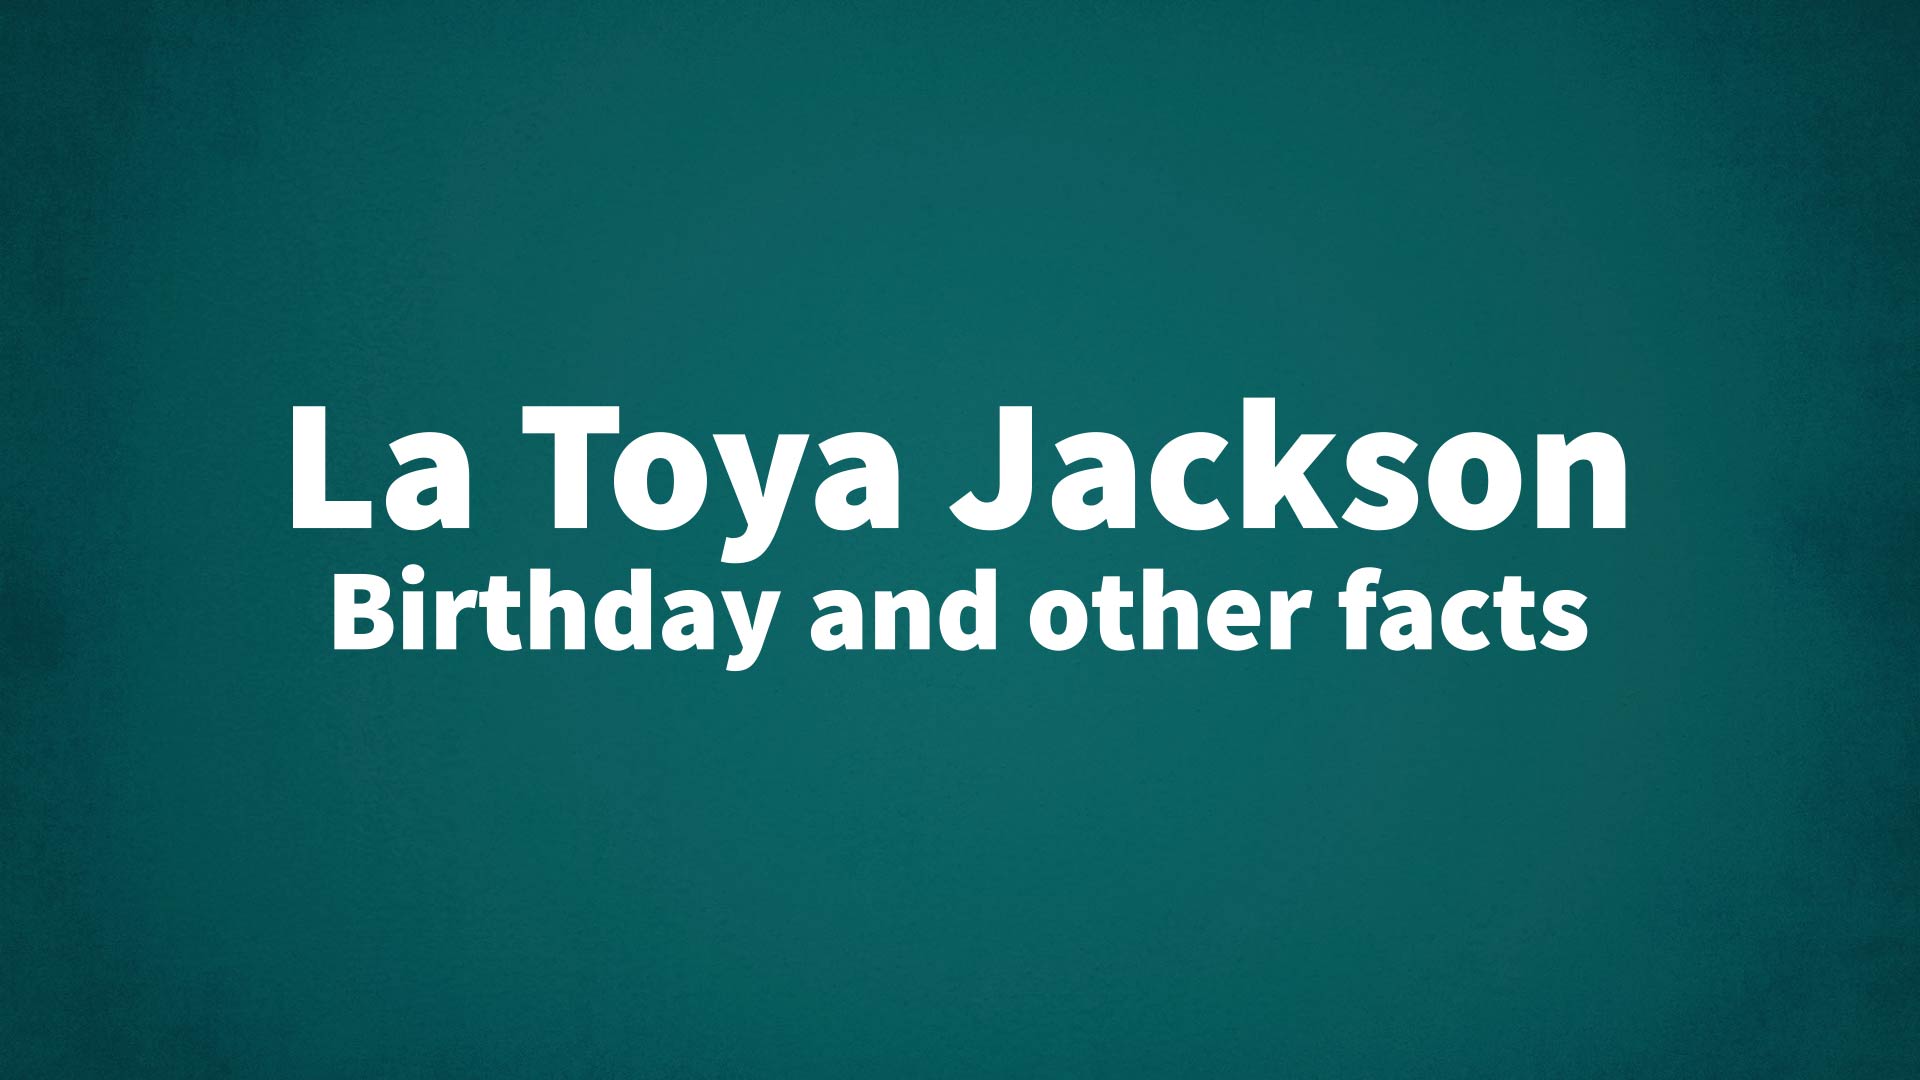 La Toya Jackson, 65th birthday on May 29.